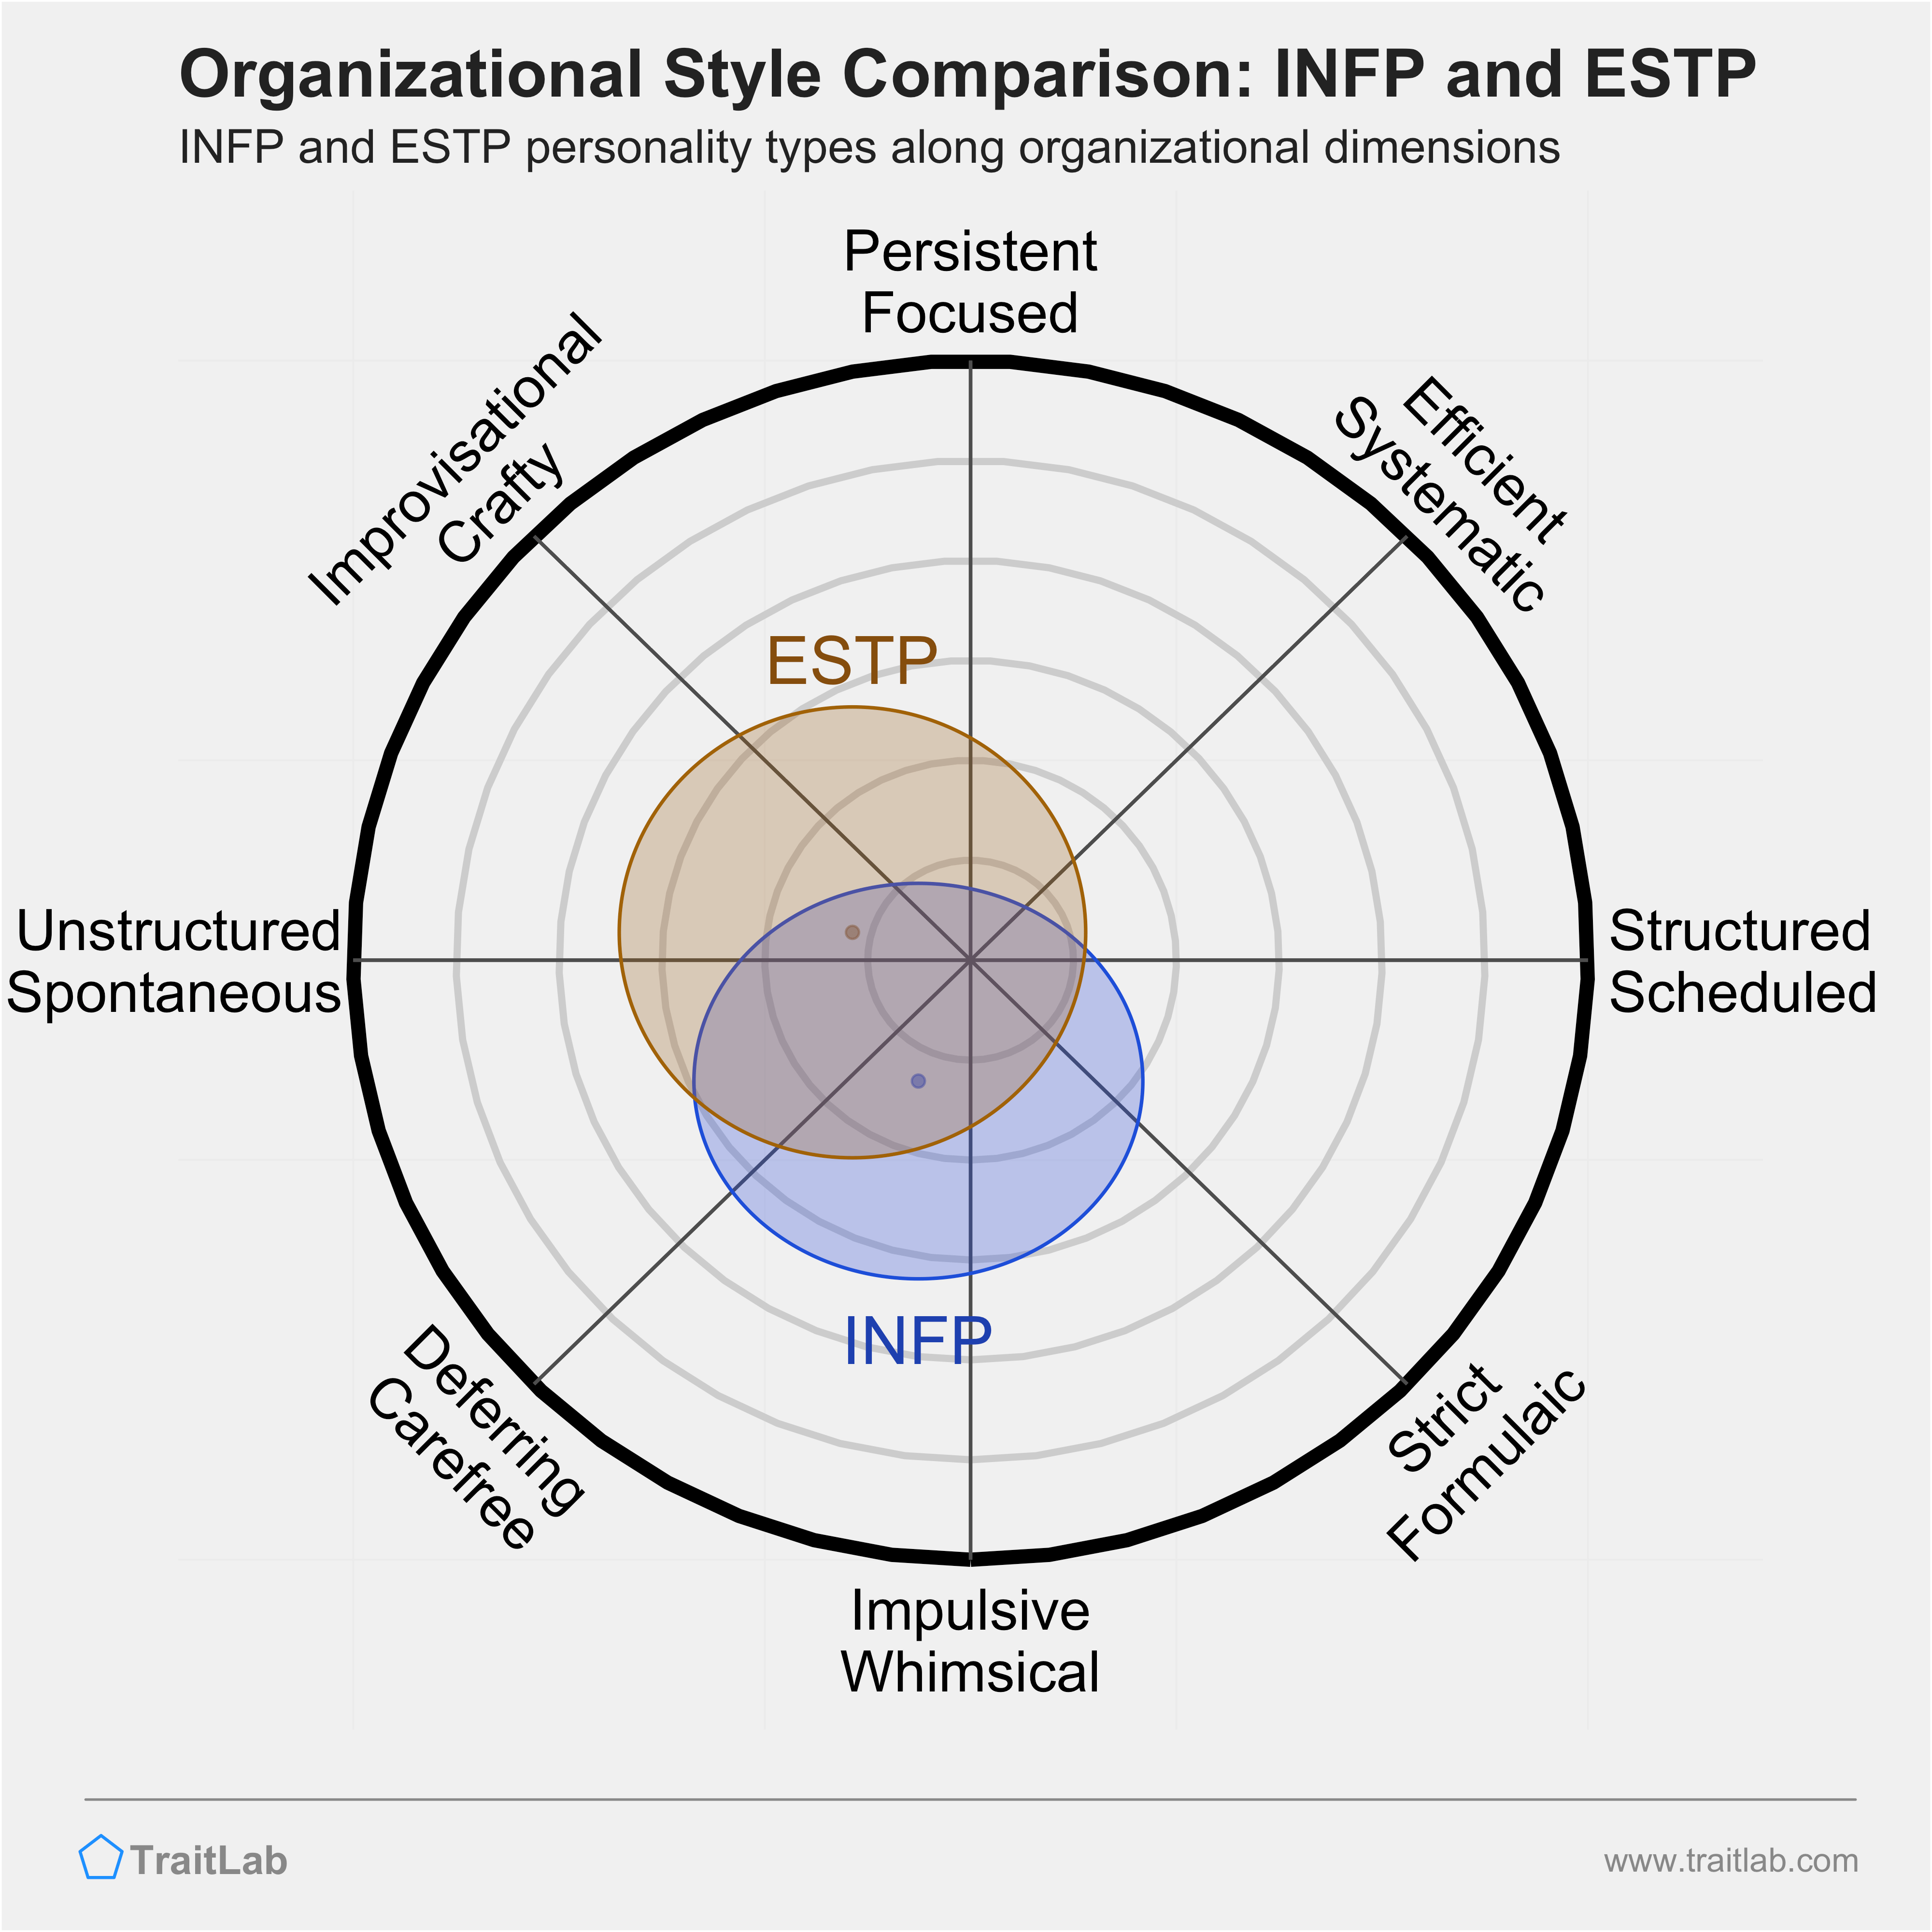 INFP and ESTP comparison across organizational dimensions